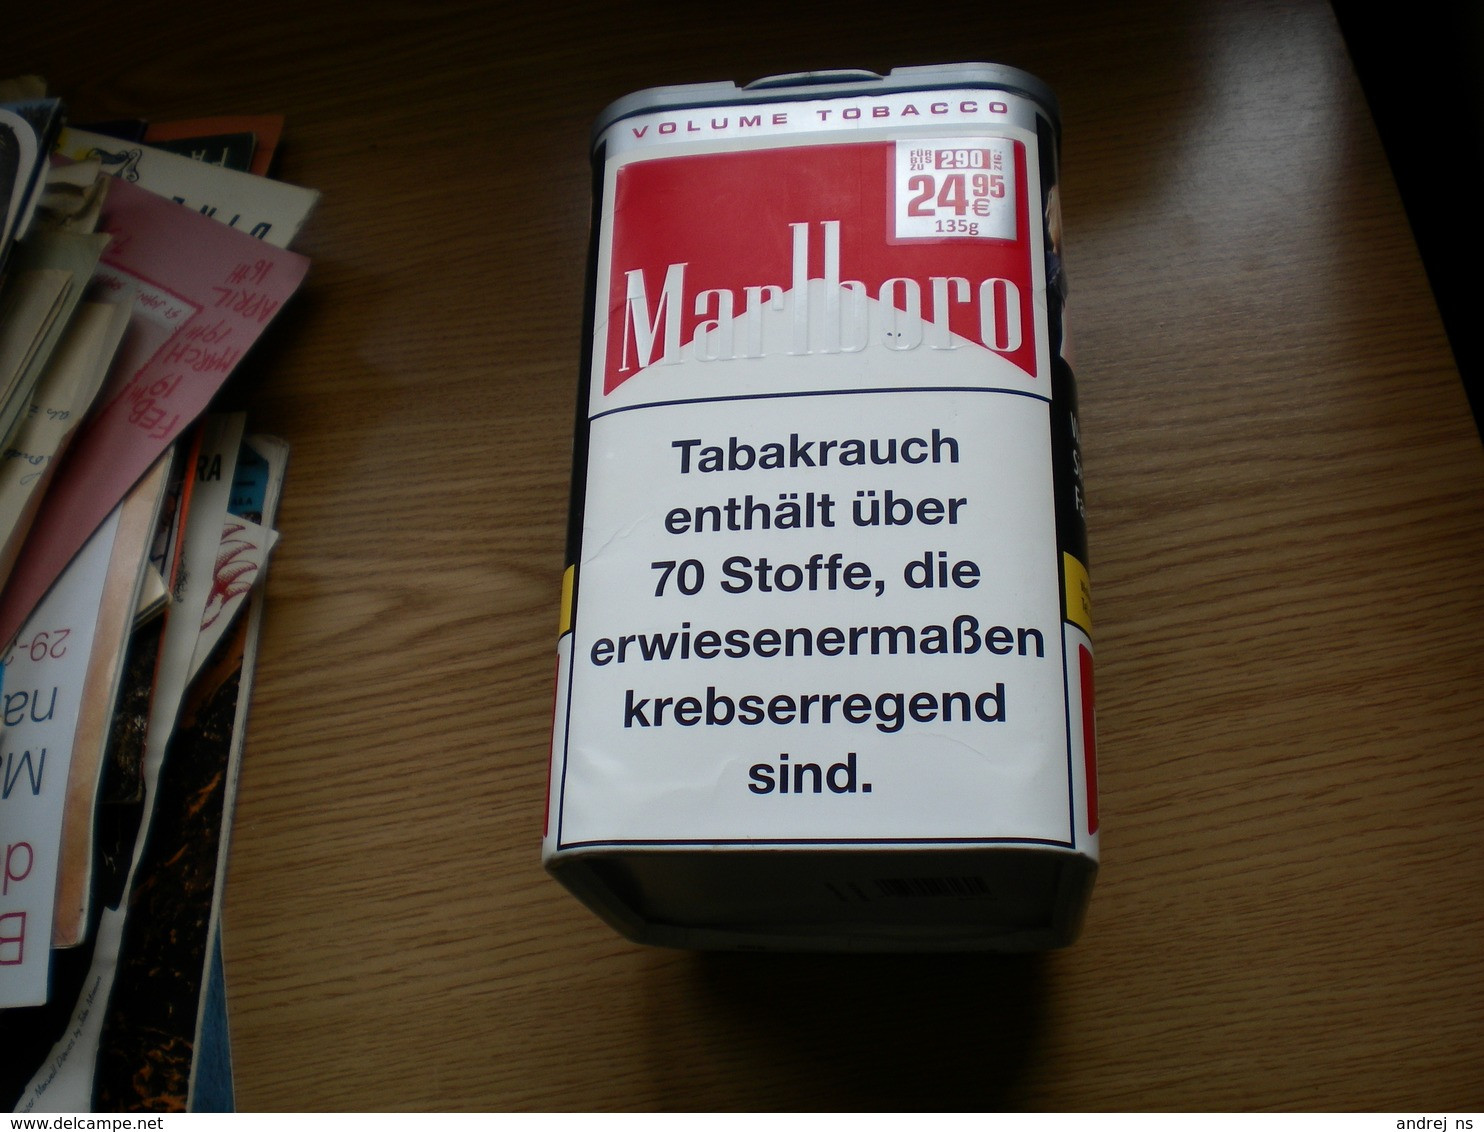 Marlboro Volume Tobacco XL Big Box - Empty Tobacco Boxes